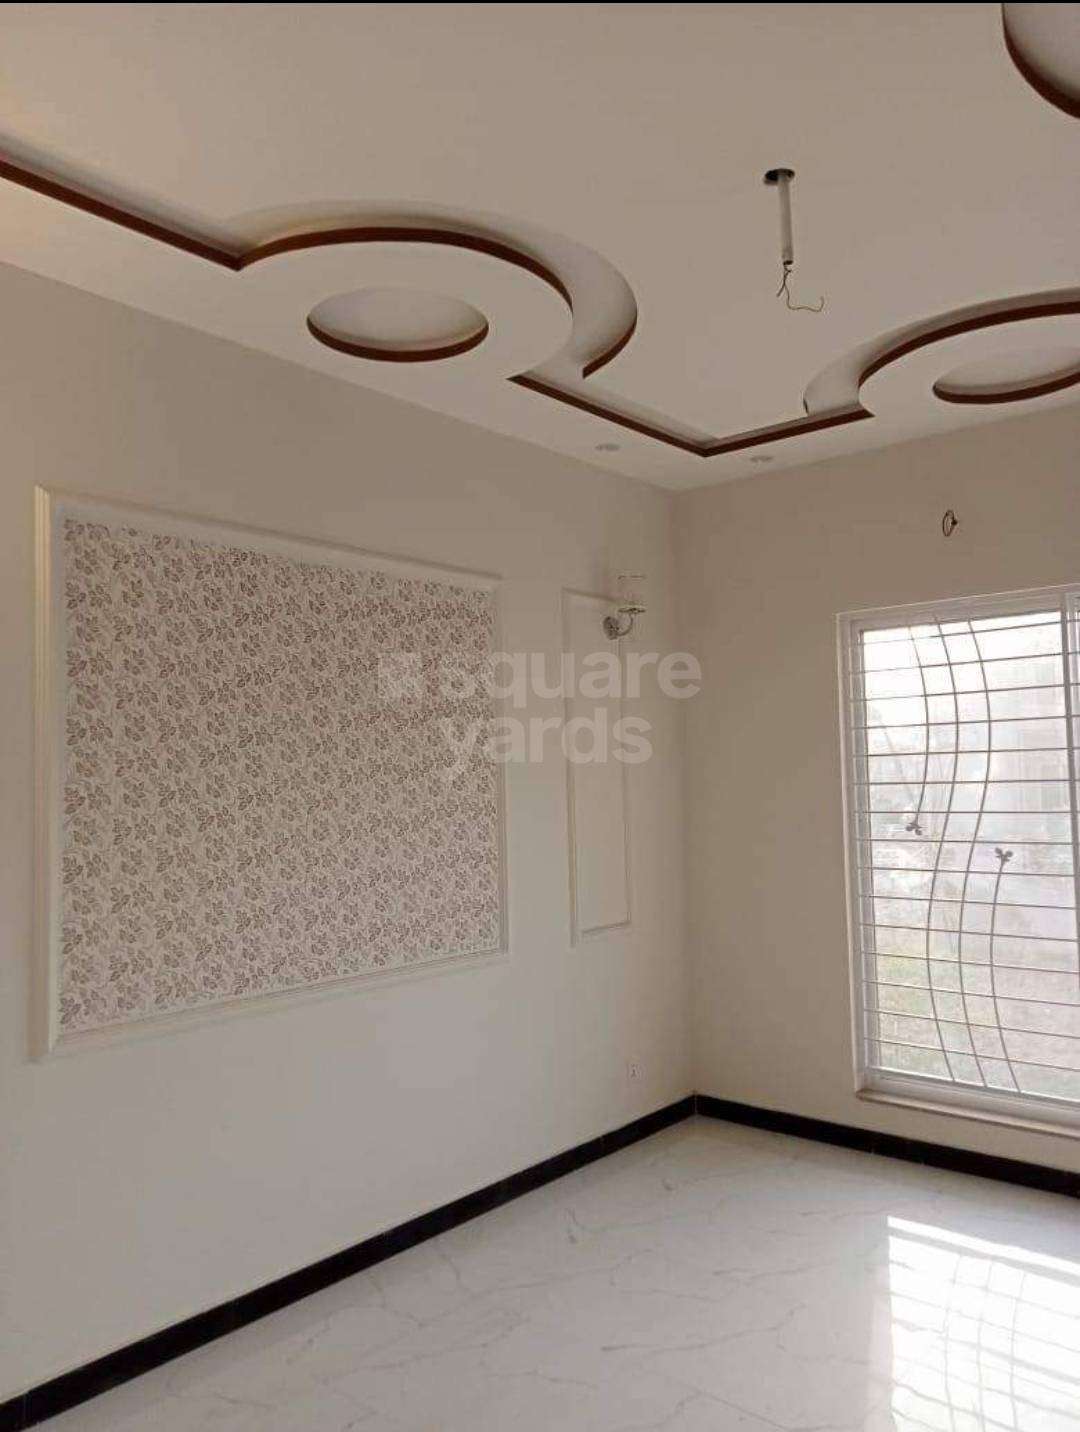 Resale 3.5 Bedroom 80 Sq.Yd. Builder Floor in Burari Delhi - 4190511